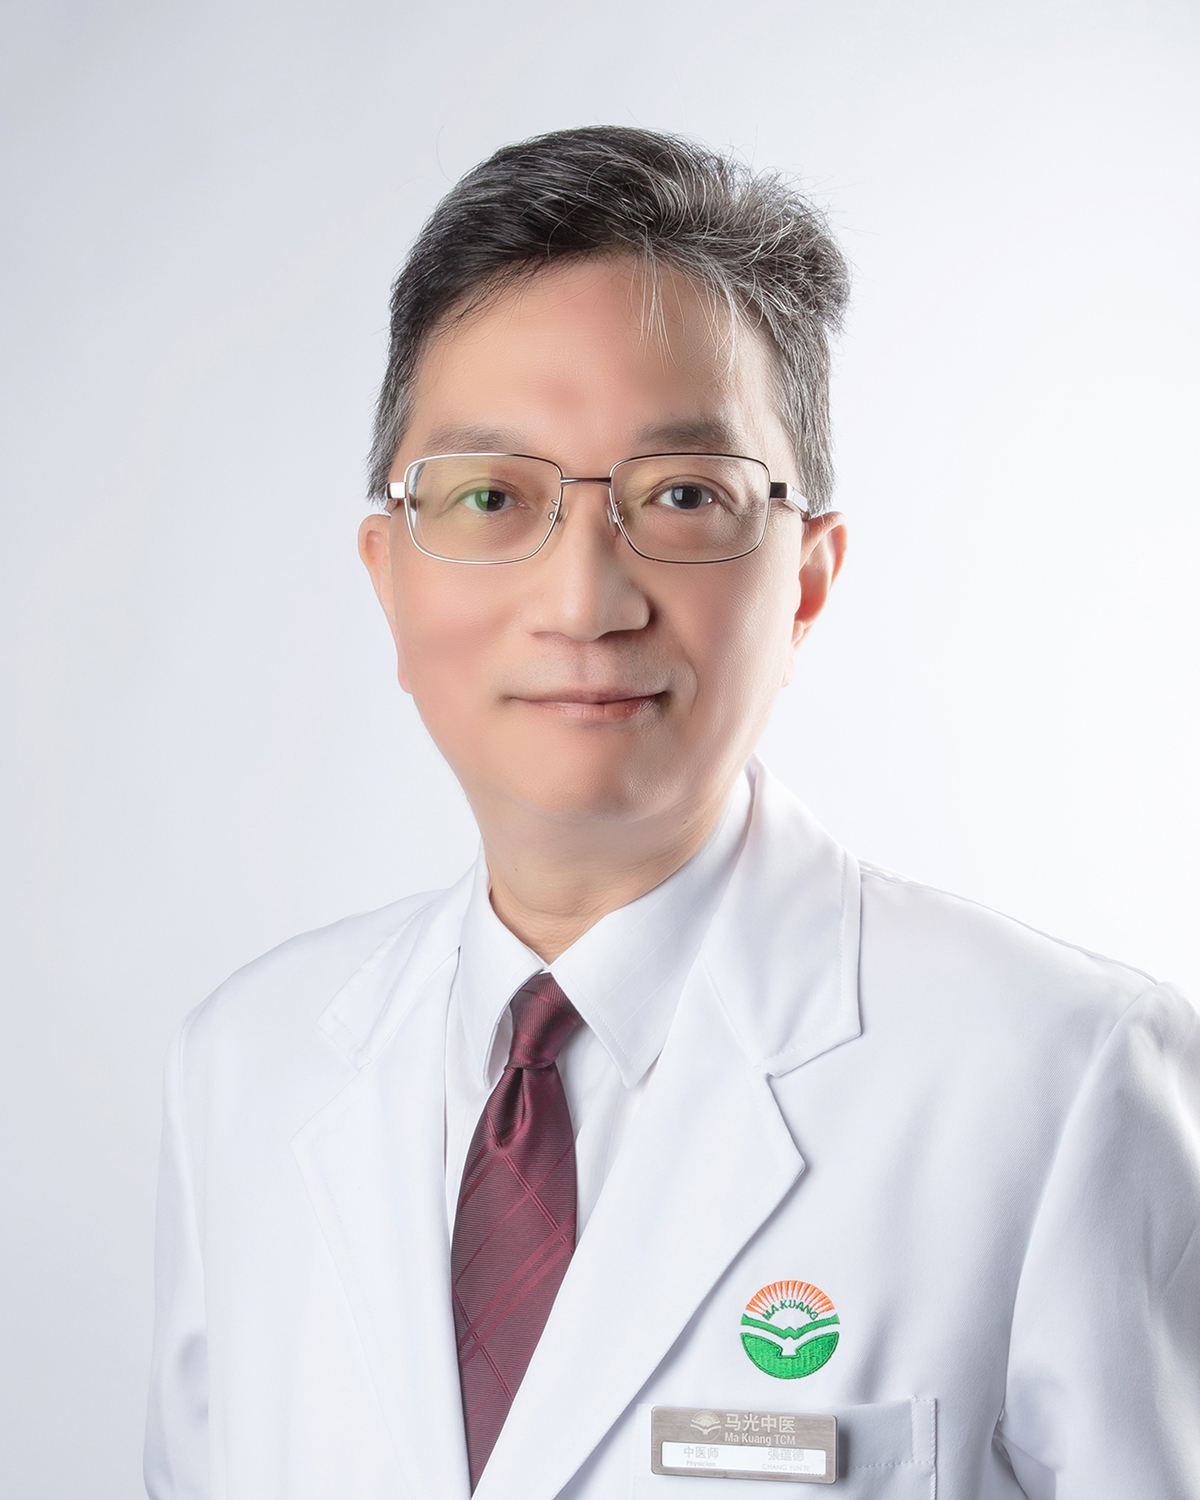 TCM PHYSICIAN DR. CHANG YUN TE